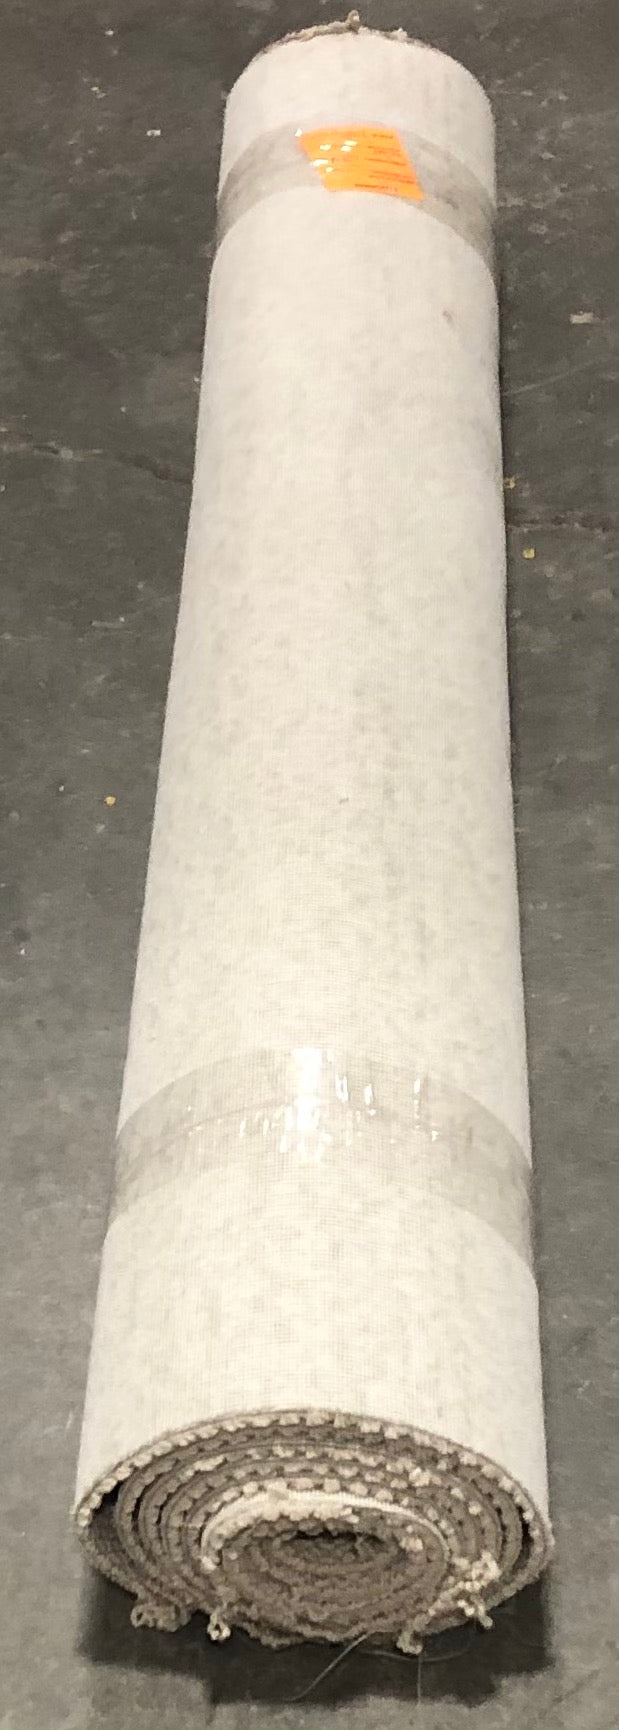 Medium Sized Roll of White Carpet